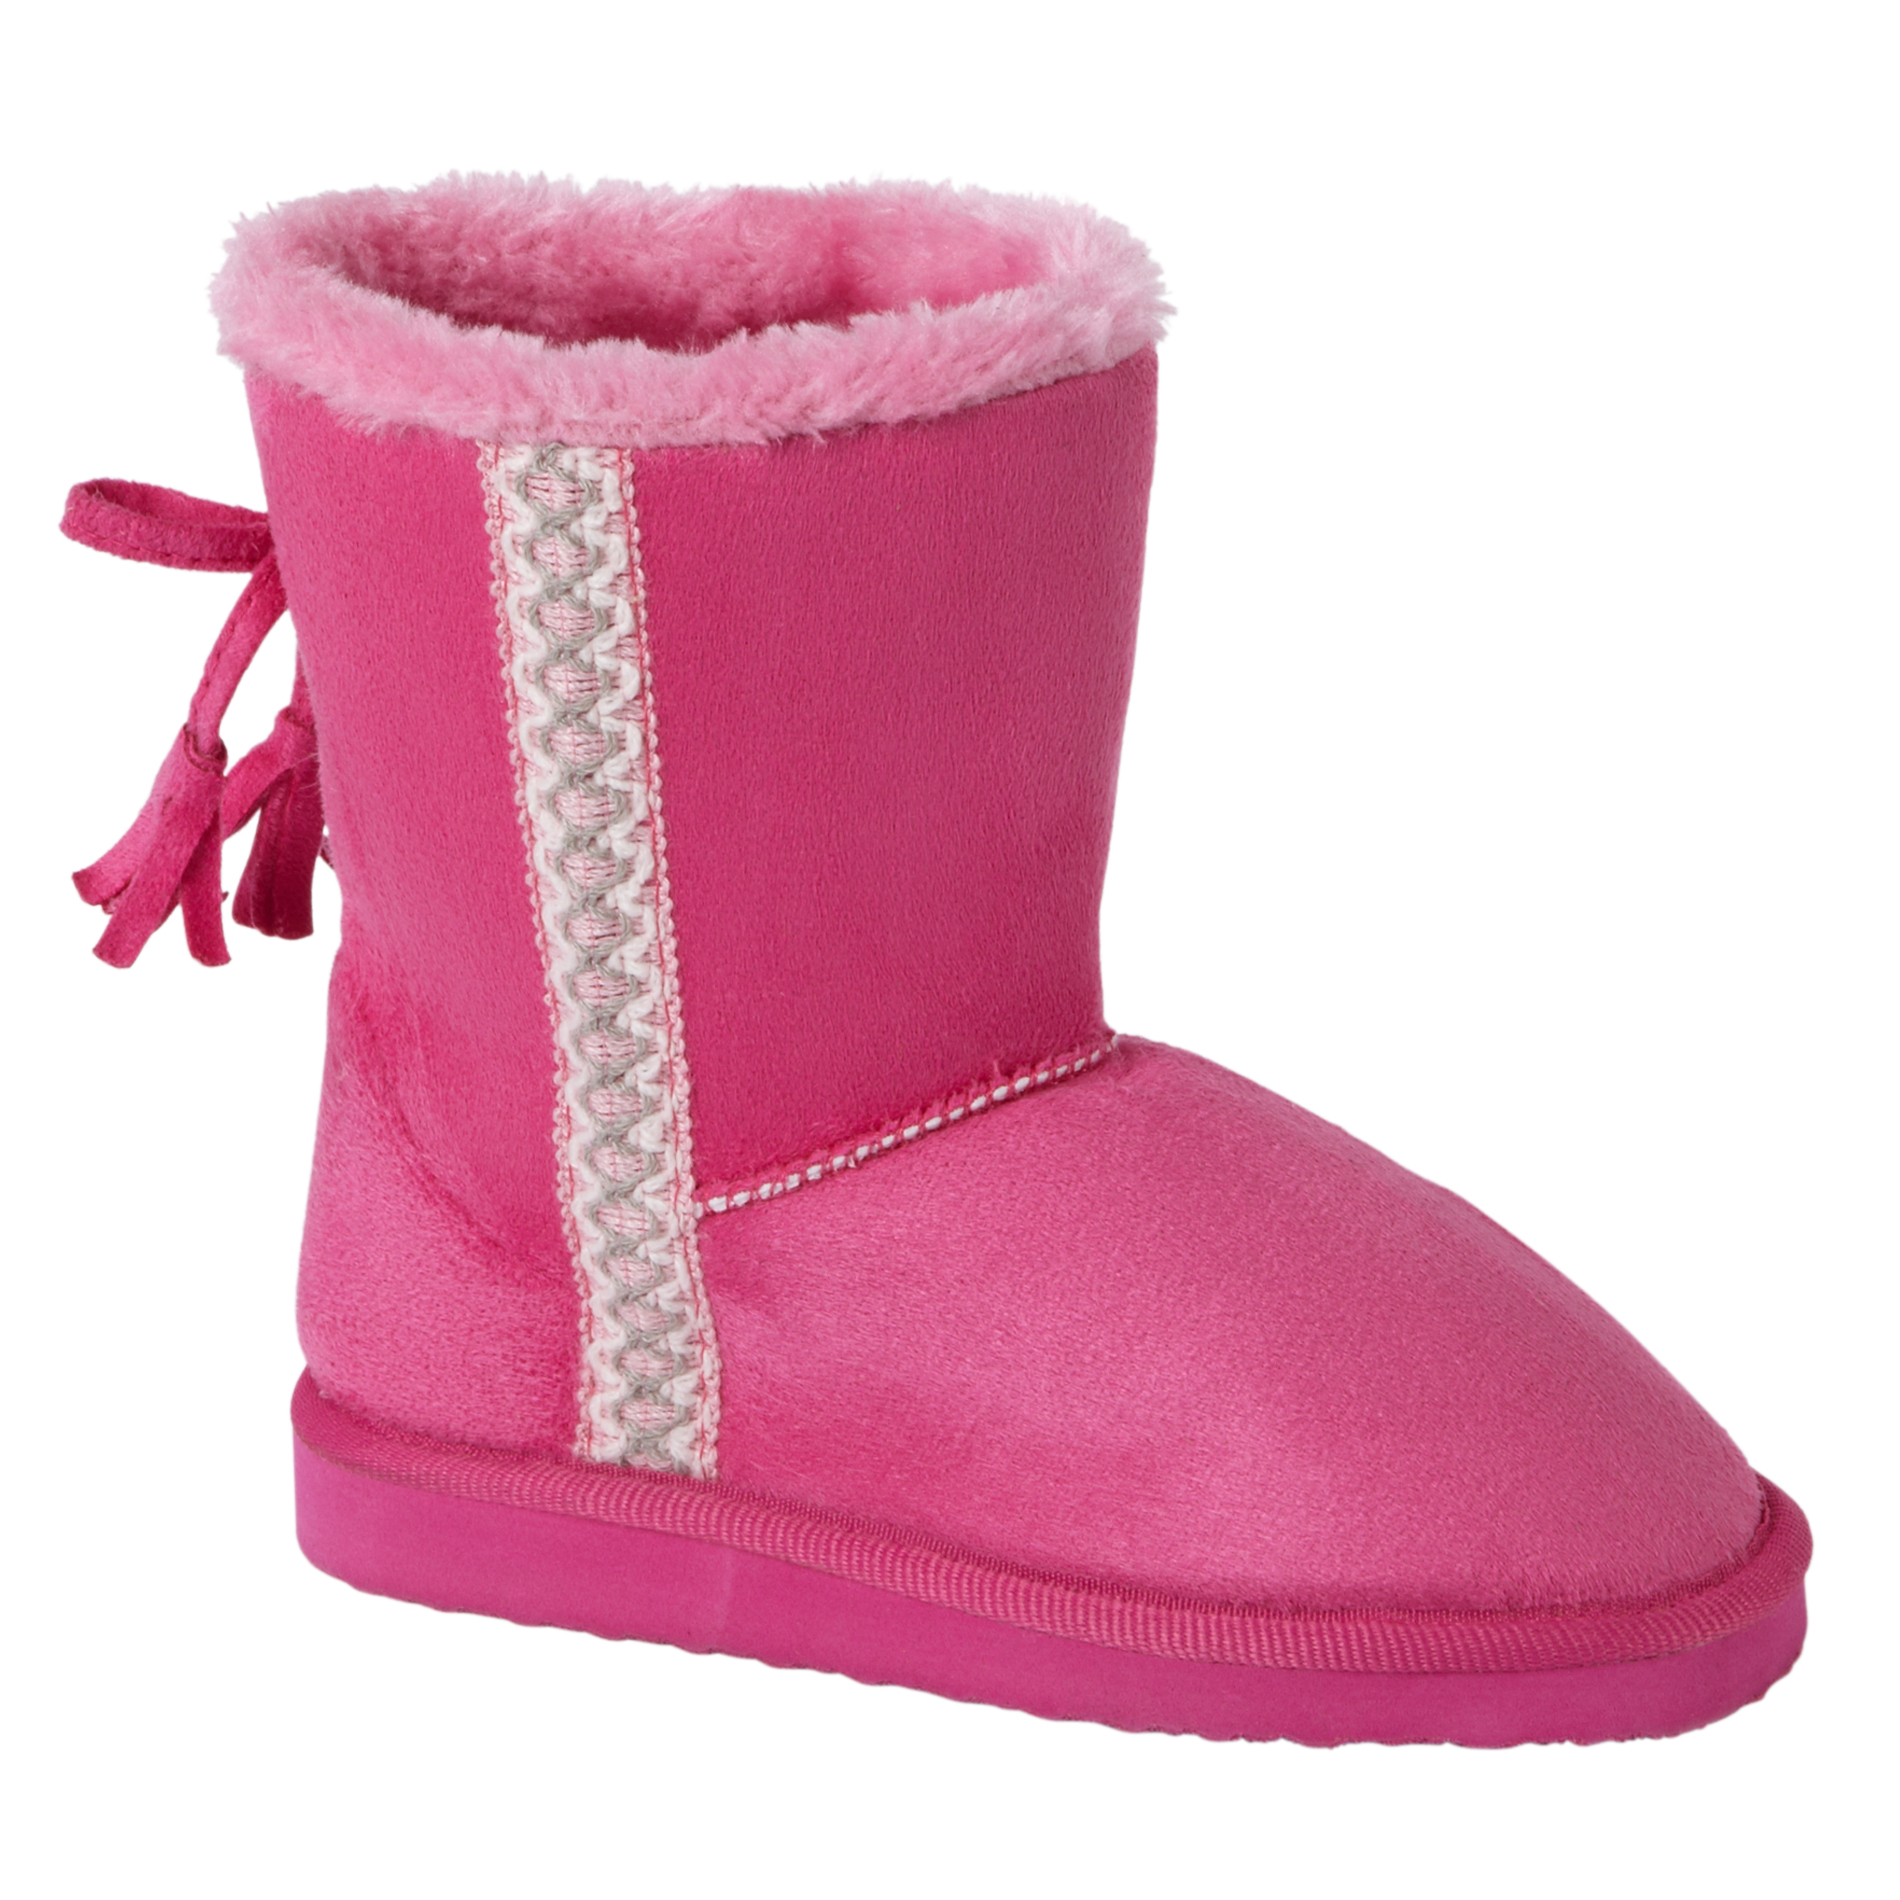 Yoki Girl's Boot Angie - Pink